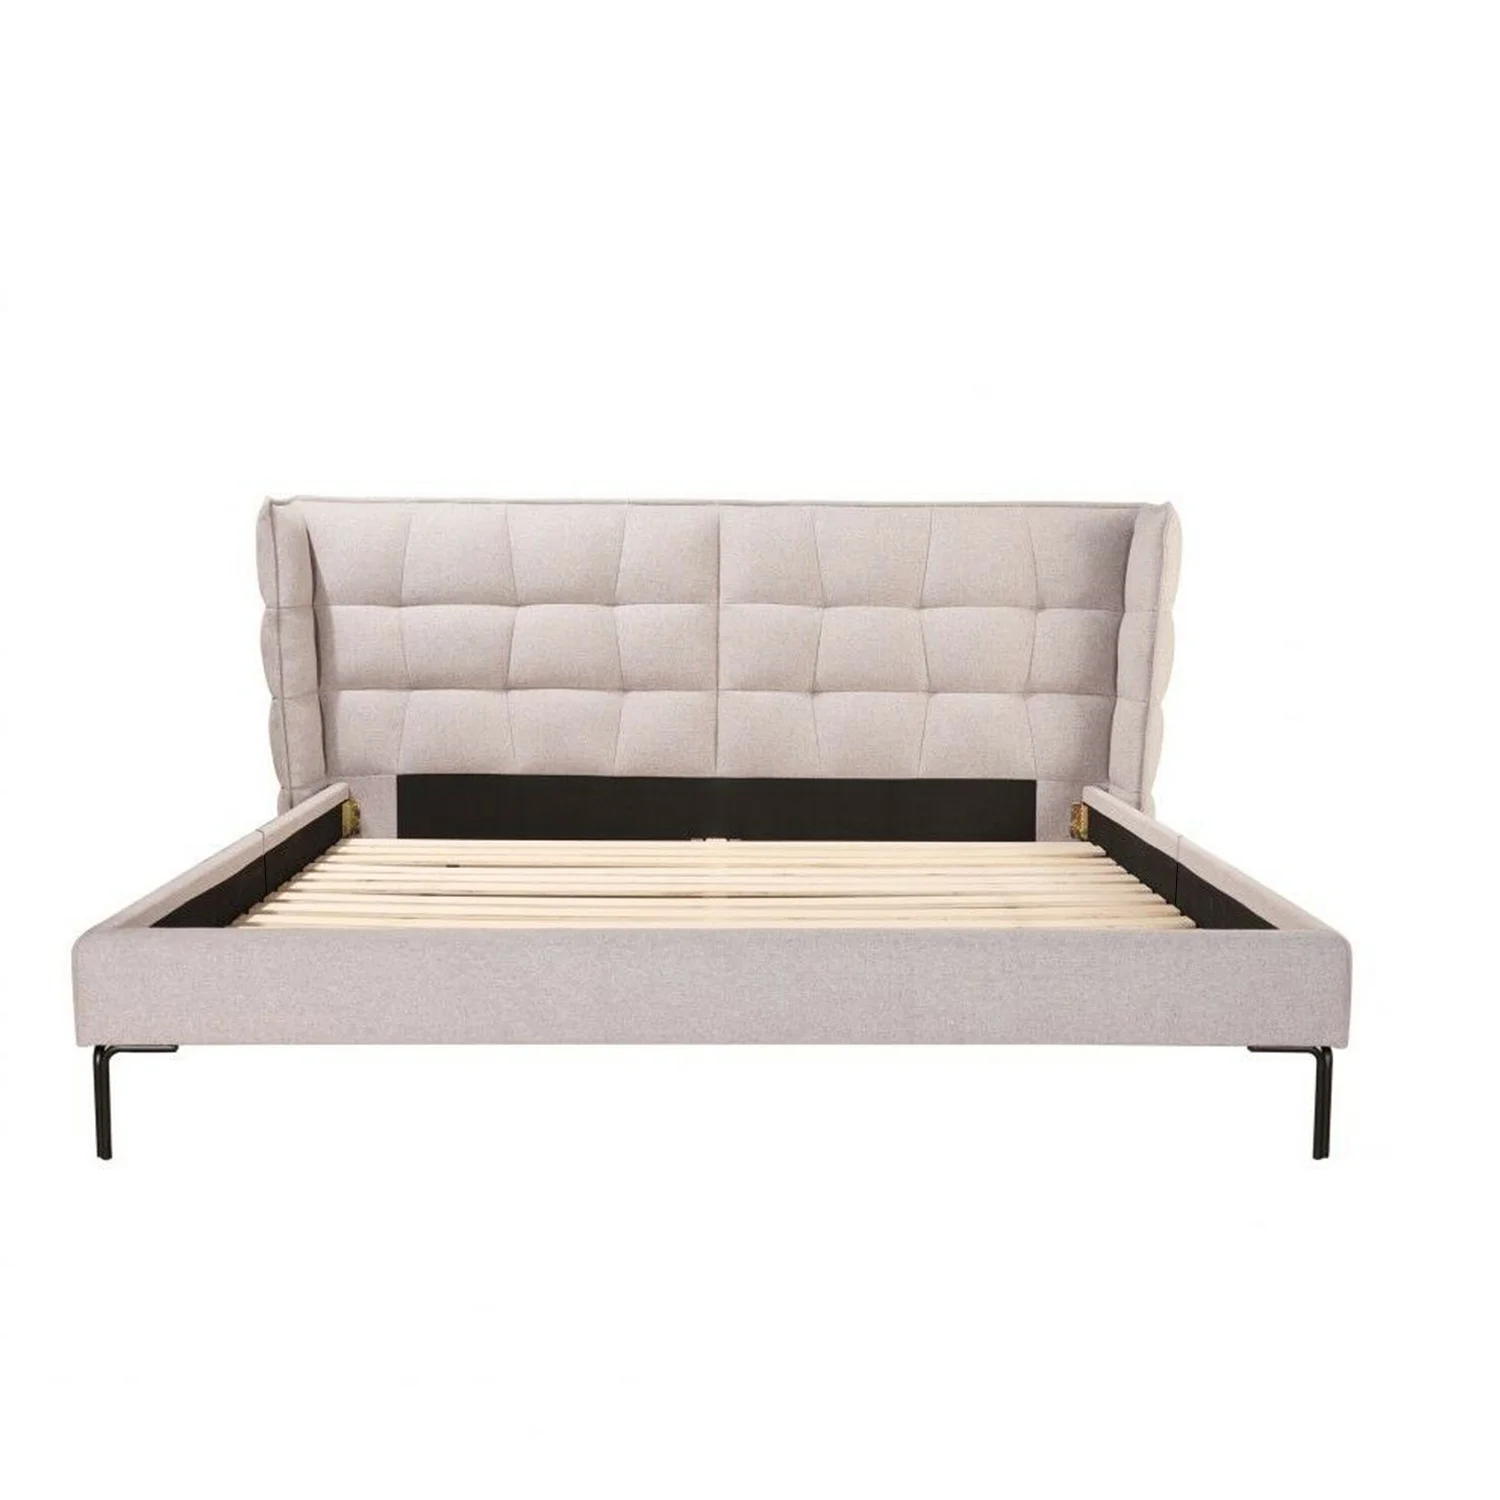 Custom Simple Modern Design Bed Hotel Home Furniture Set With Stylish Headboard